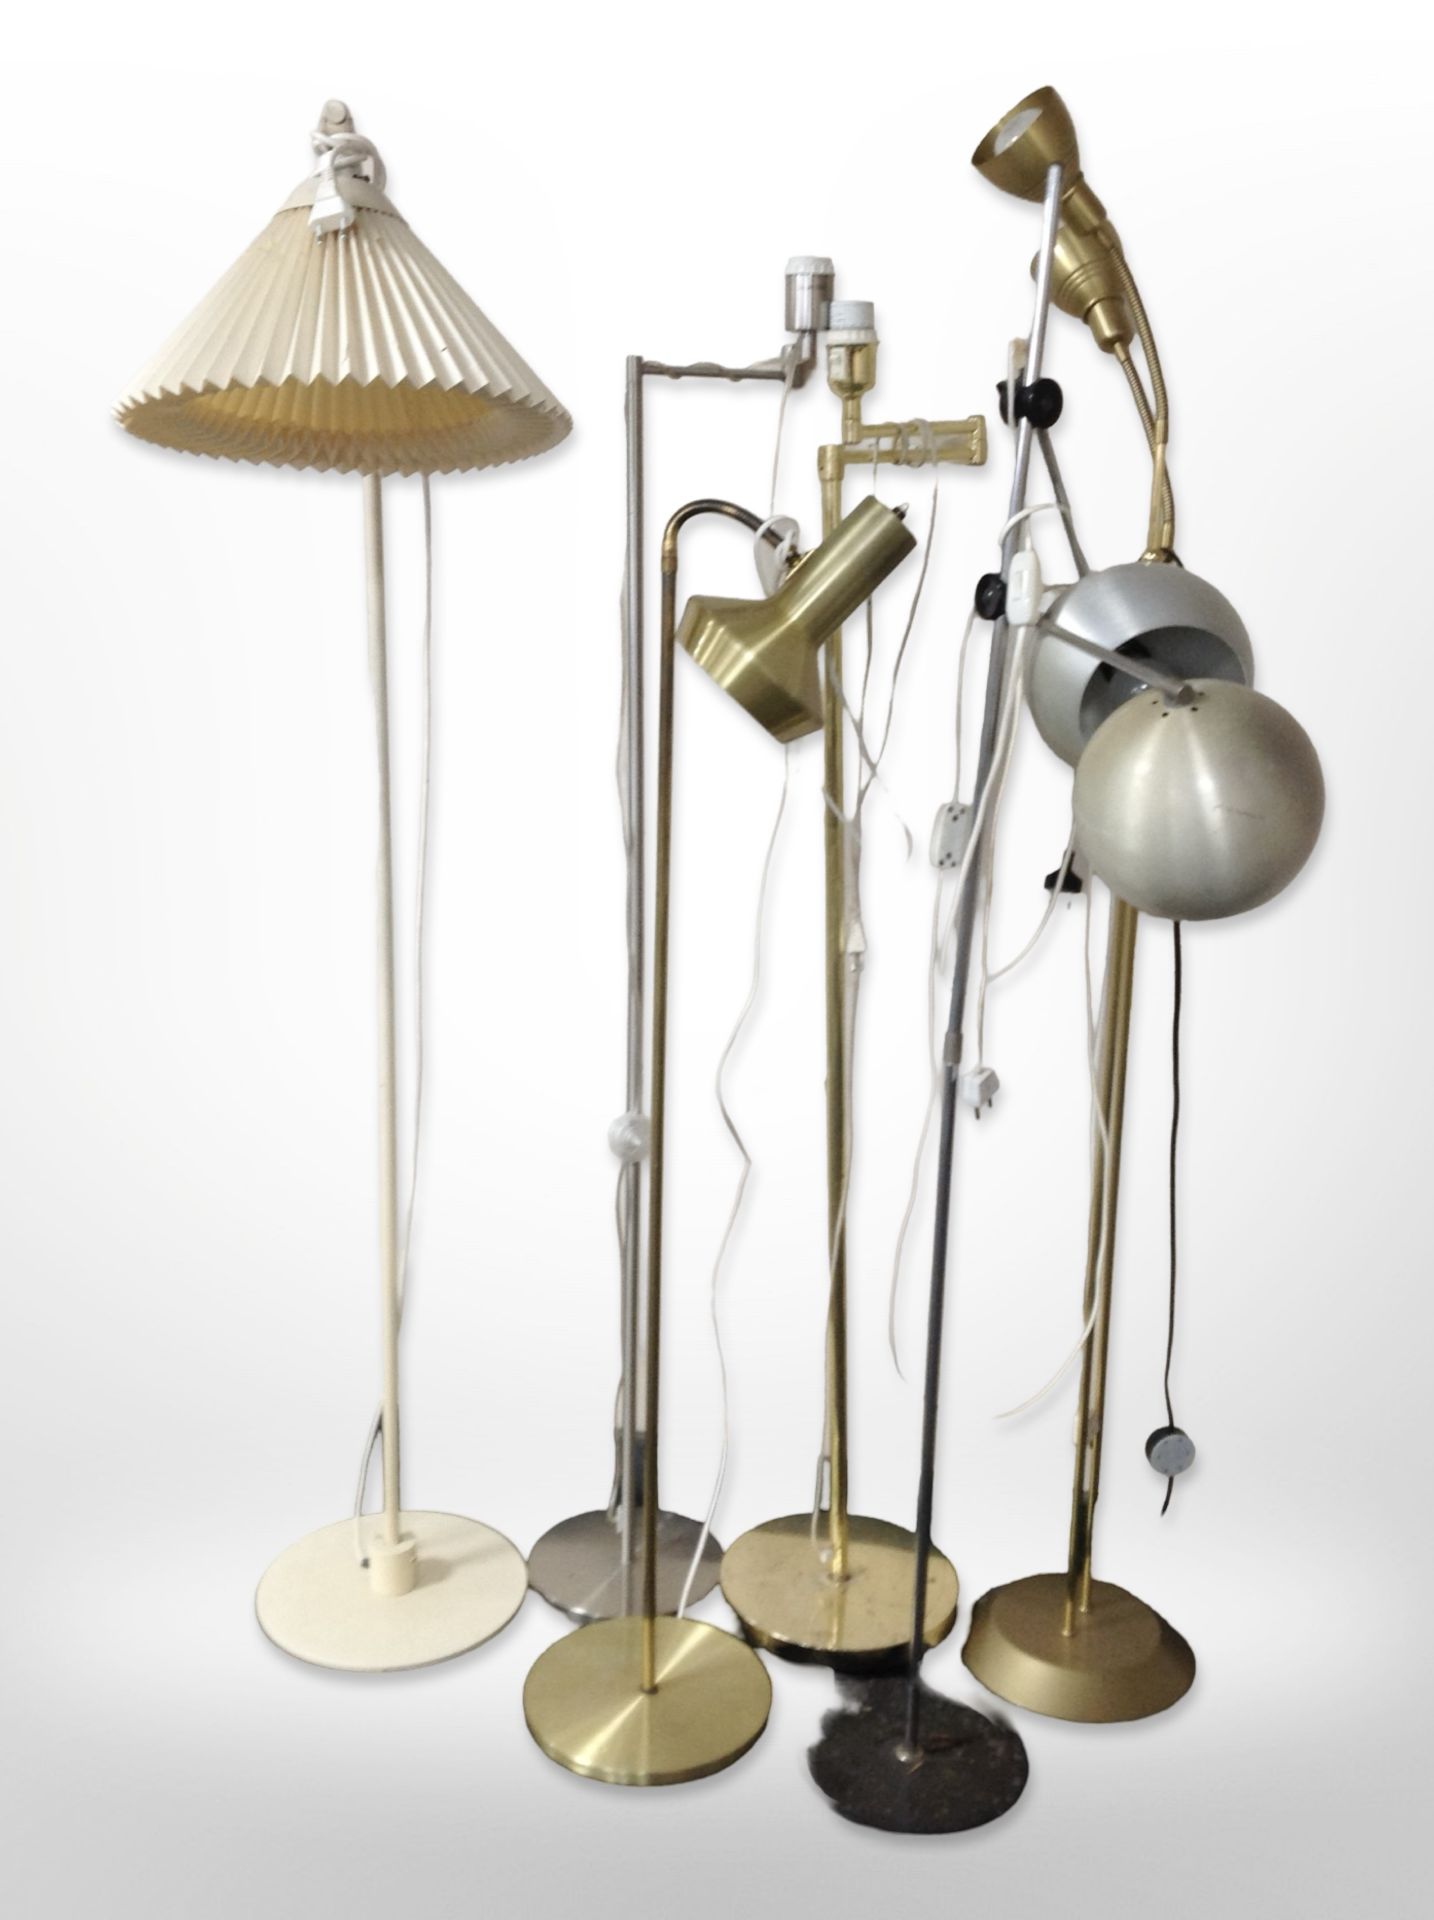 Six vintage Continental metal standard lamps